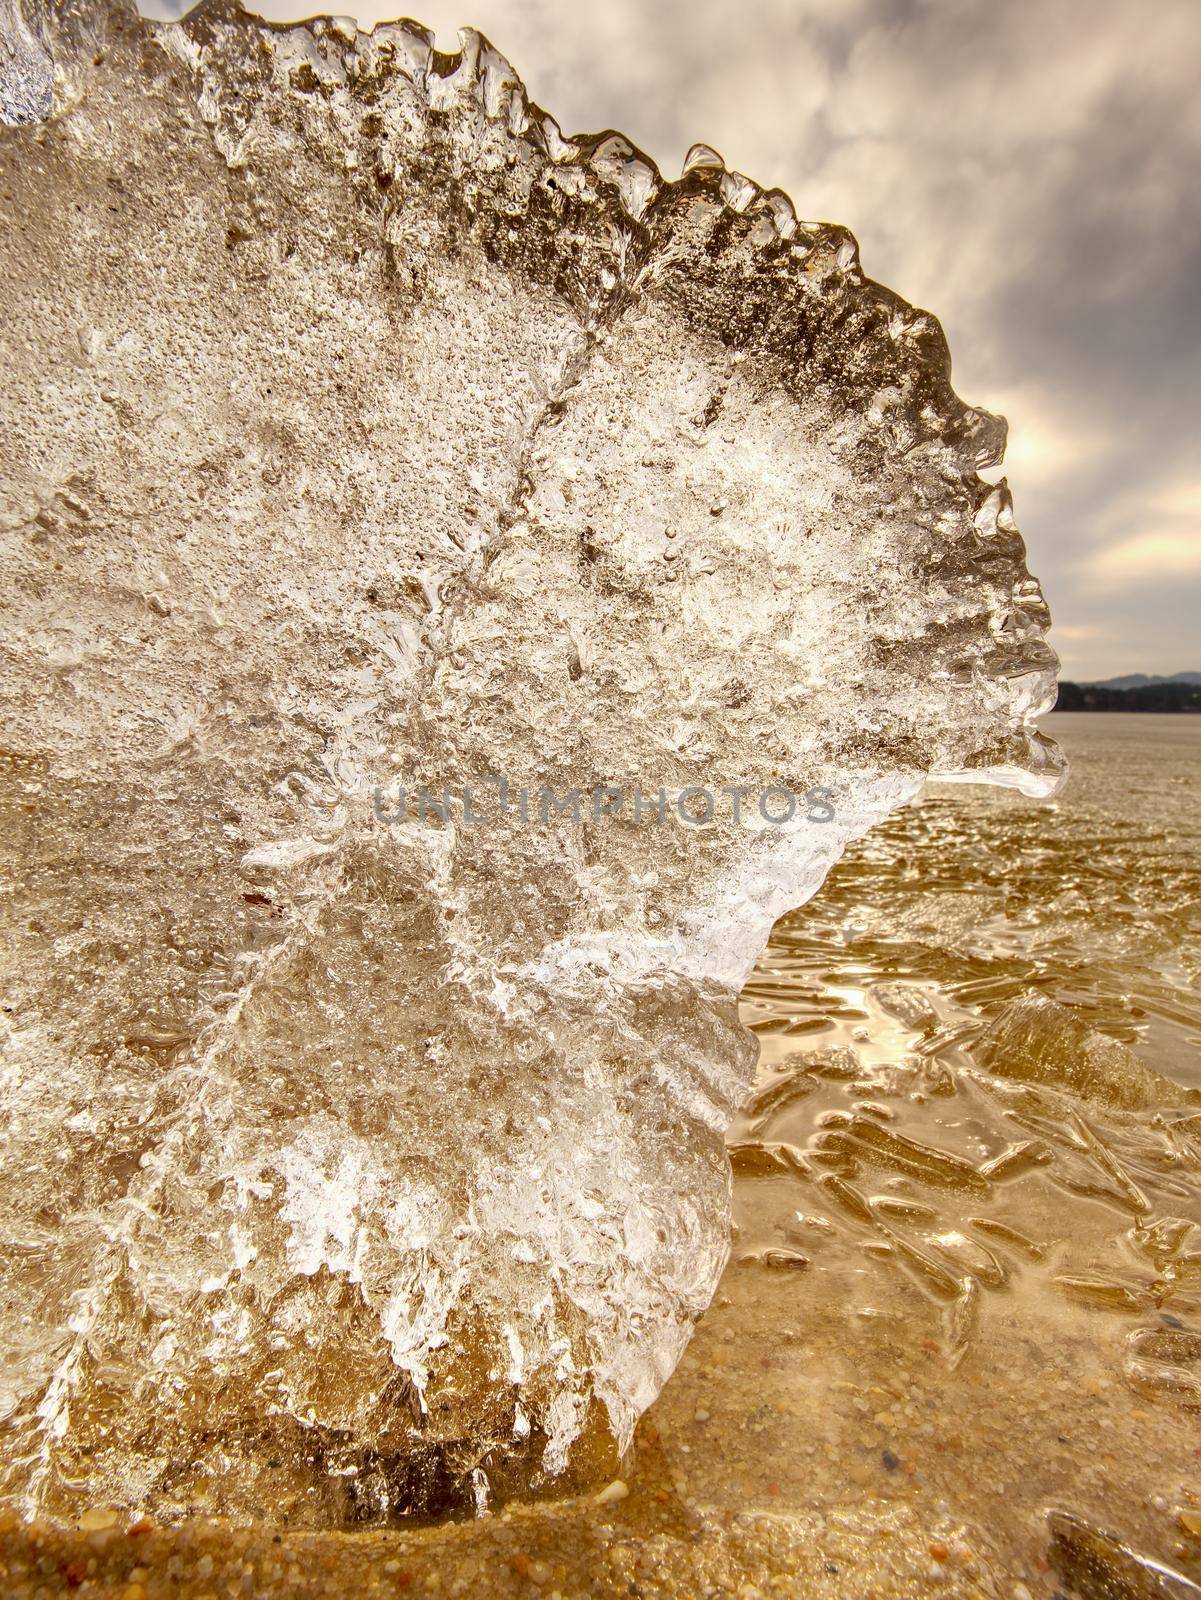  Ice melting on sandy beach.  Detail of ice floe with deep cracks inside by rdonar2